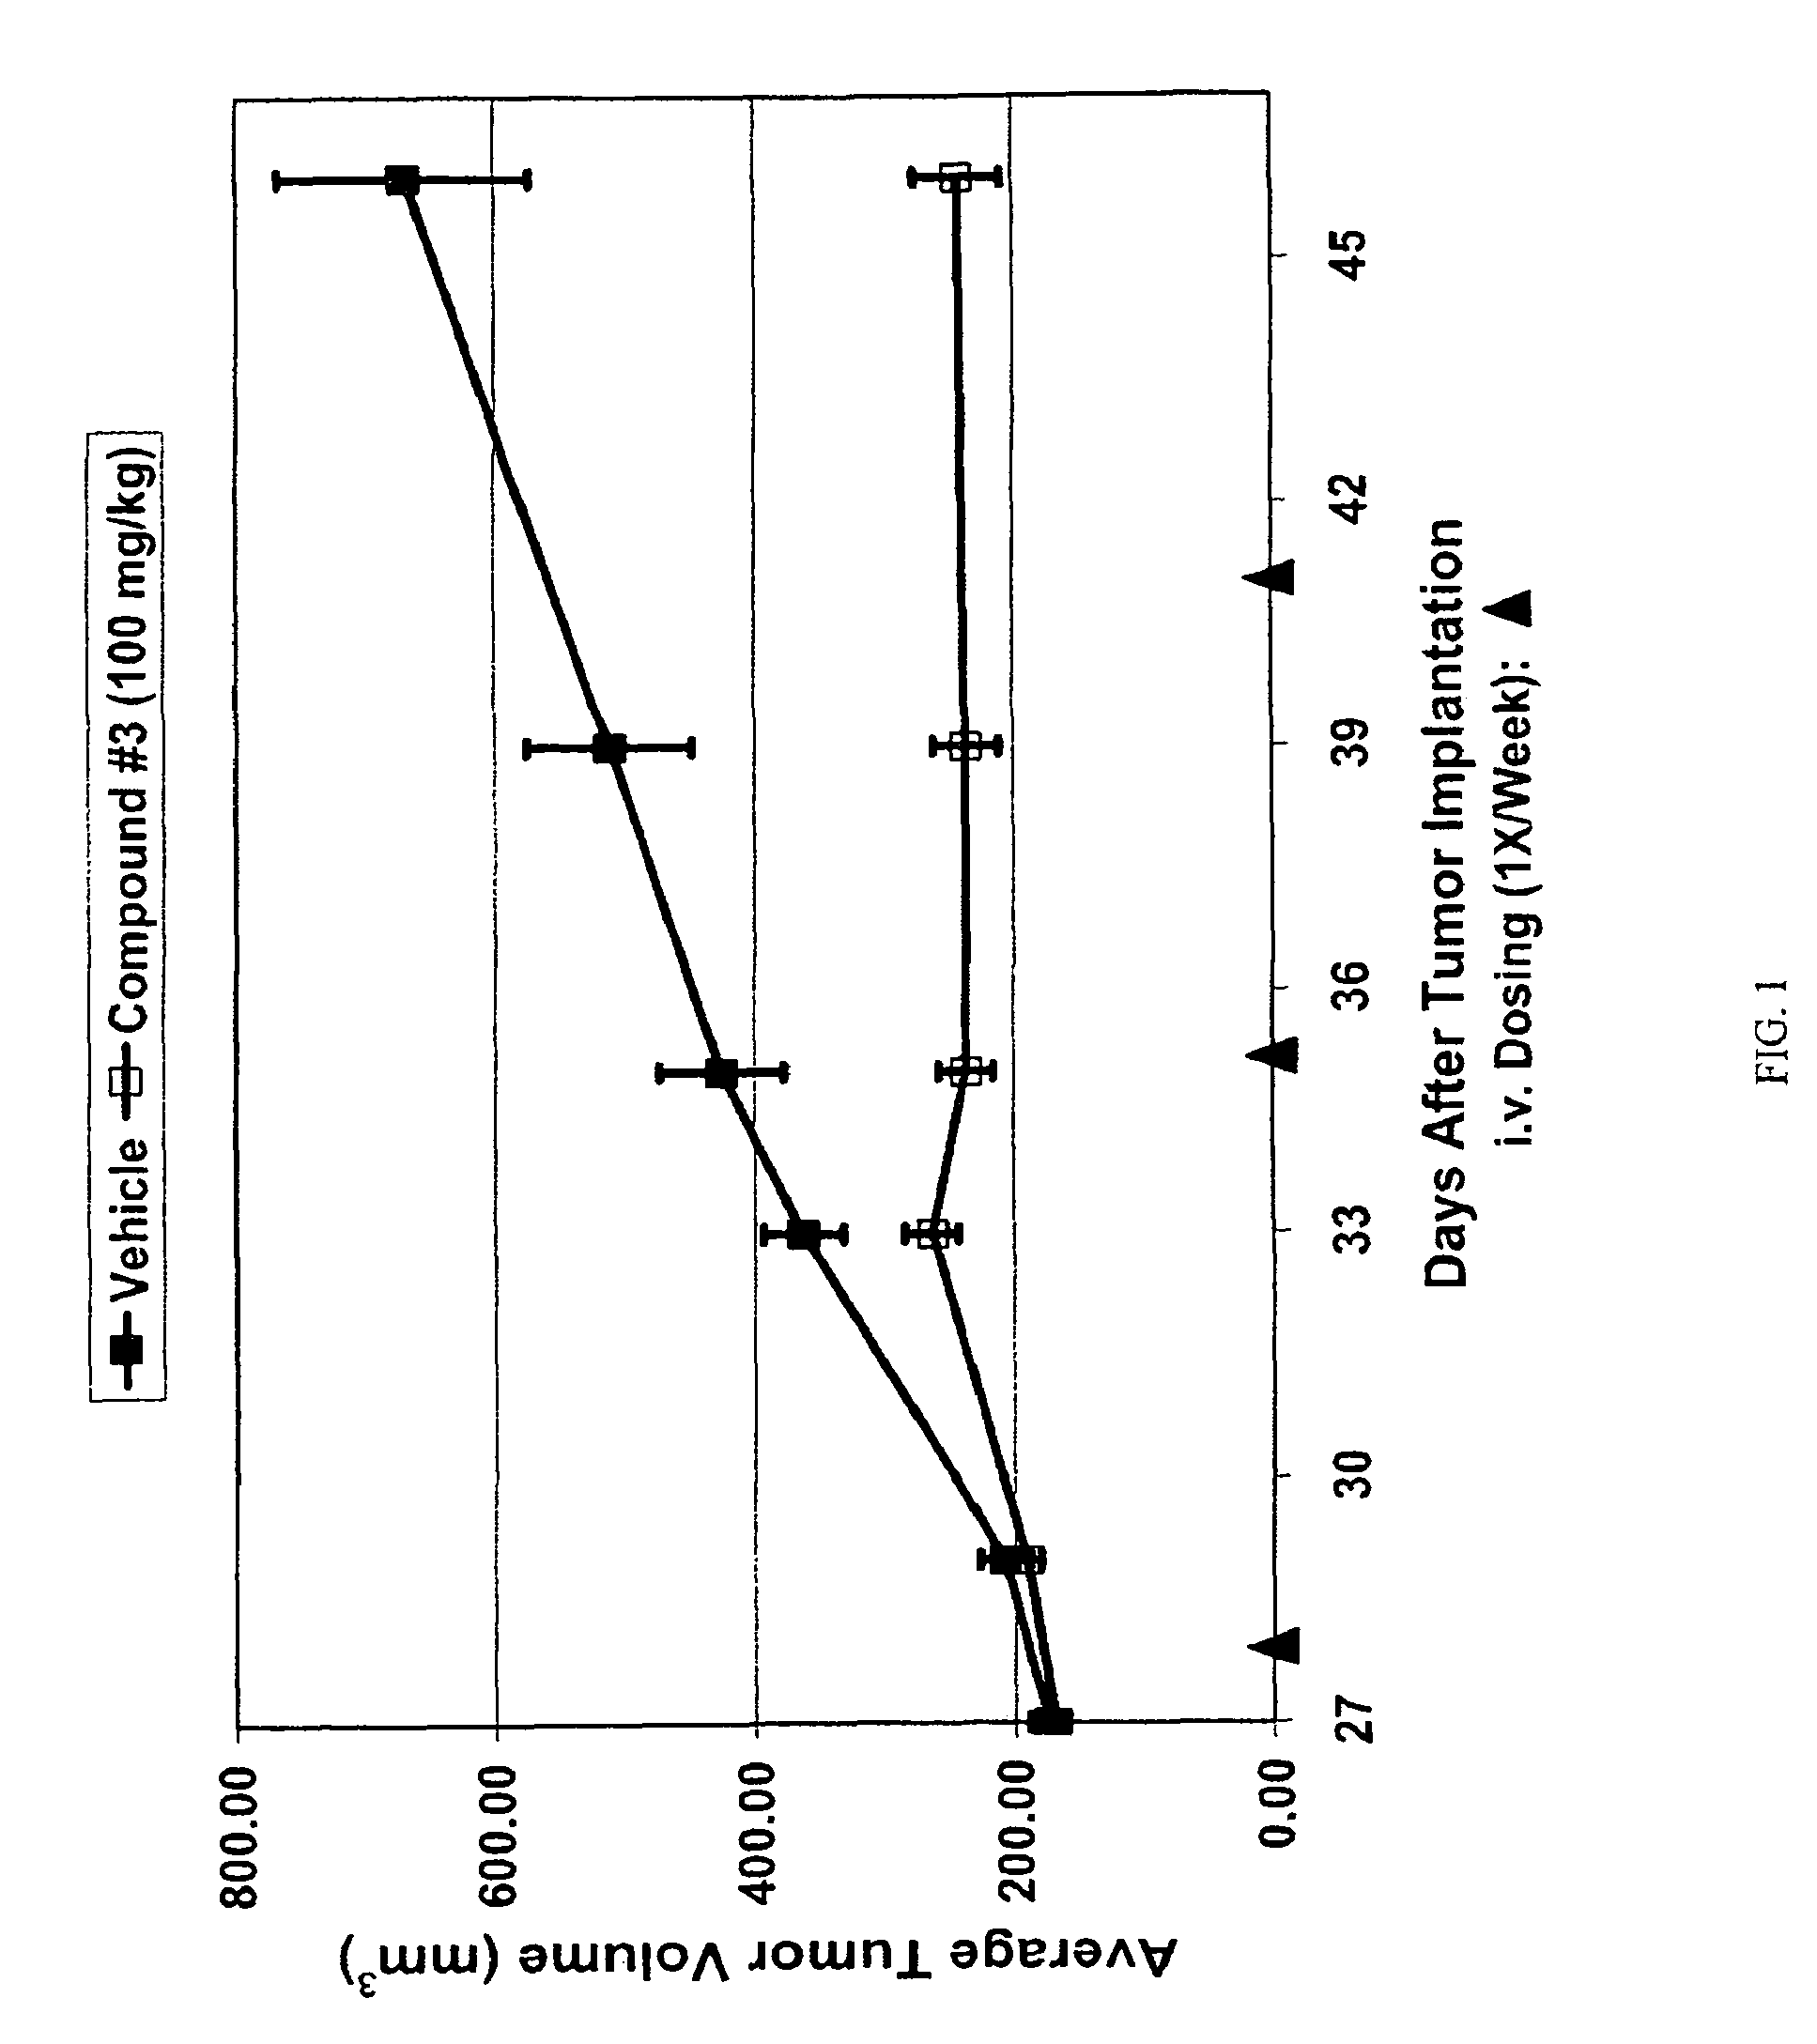 Triazole compounds that modulate HSP90 activity